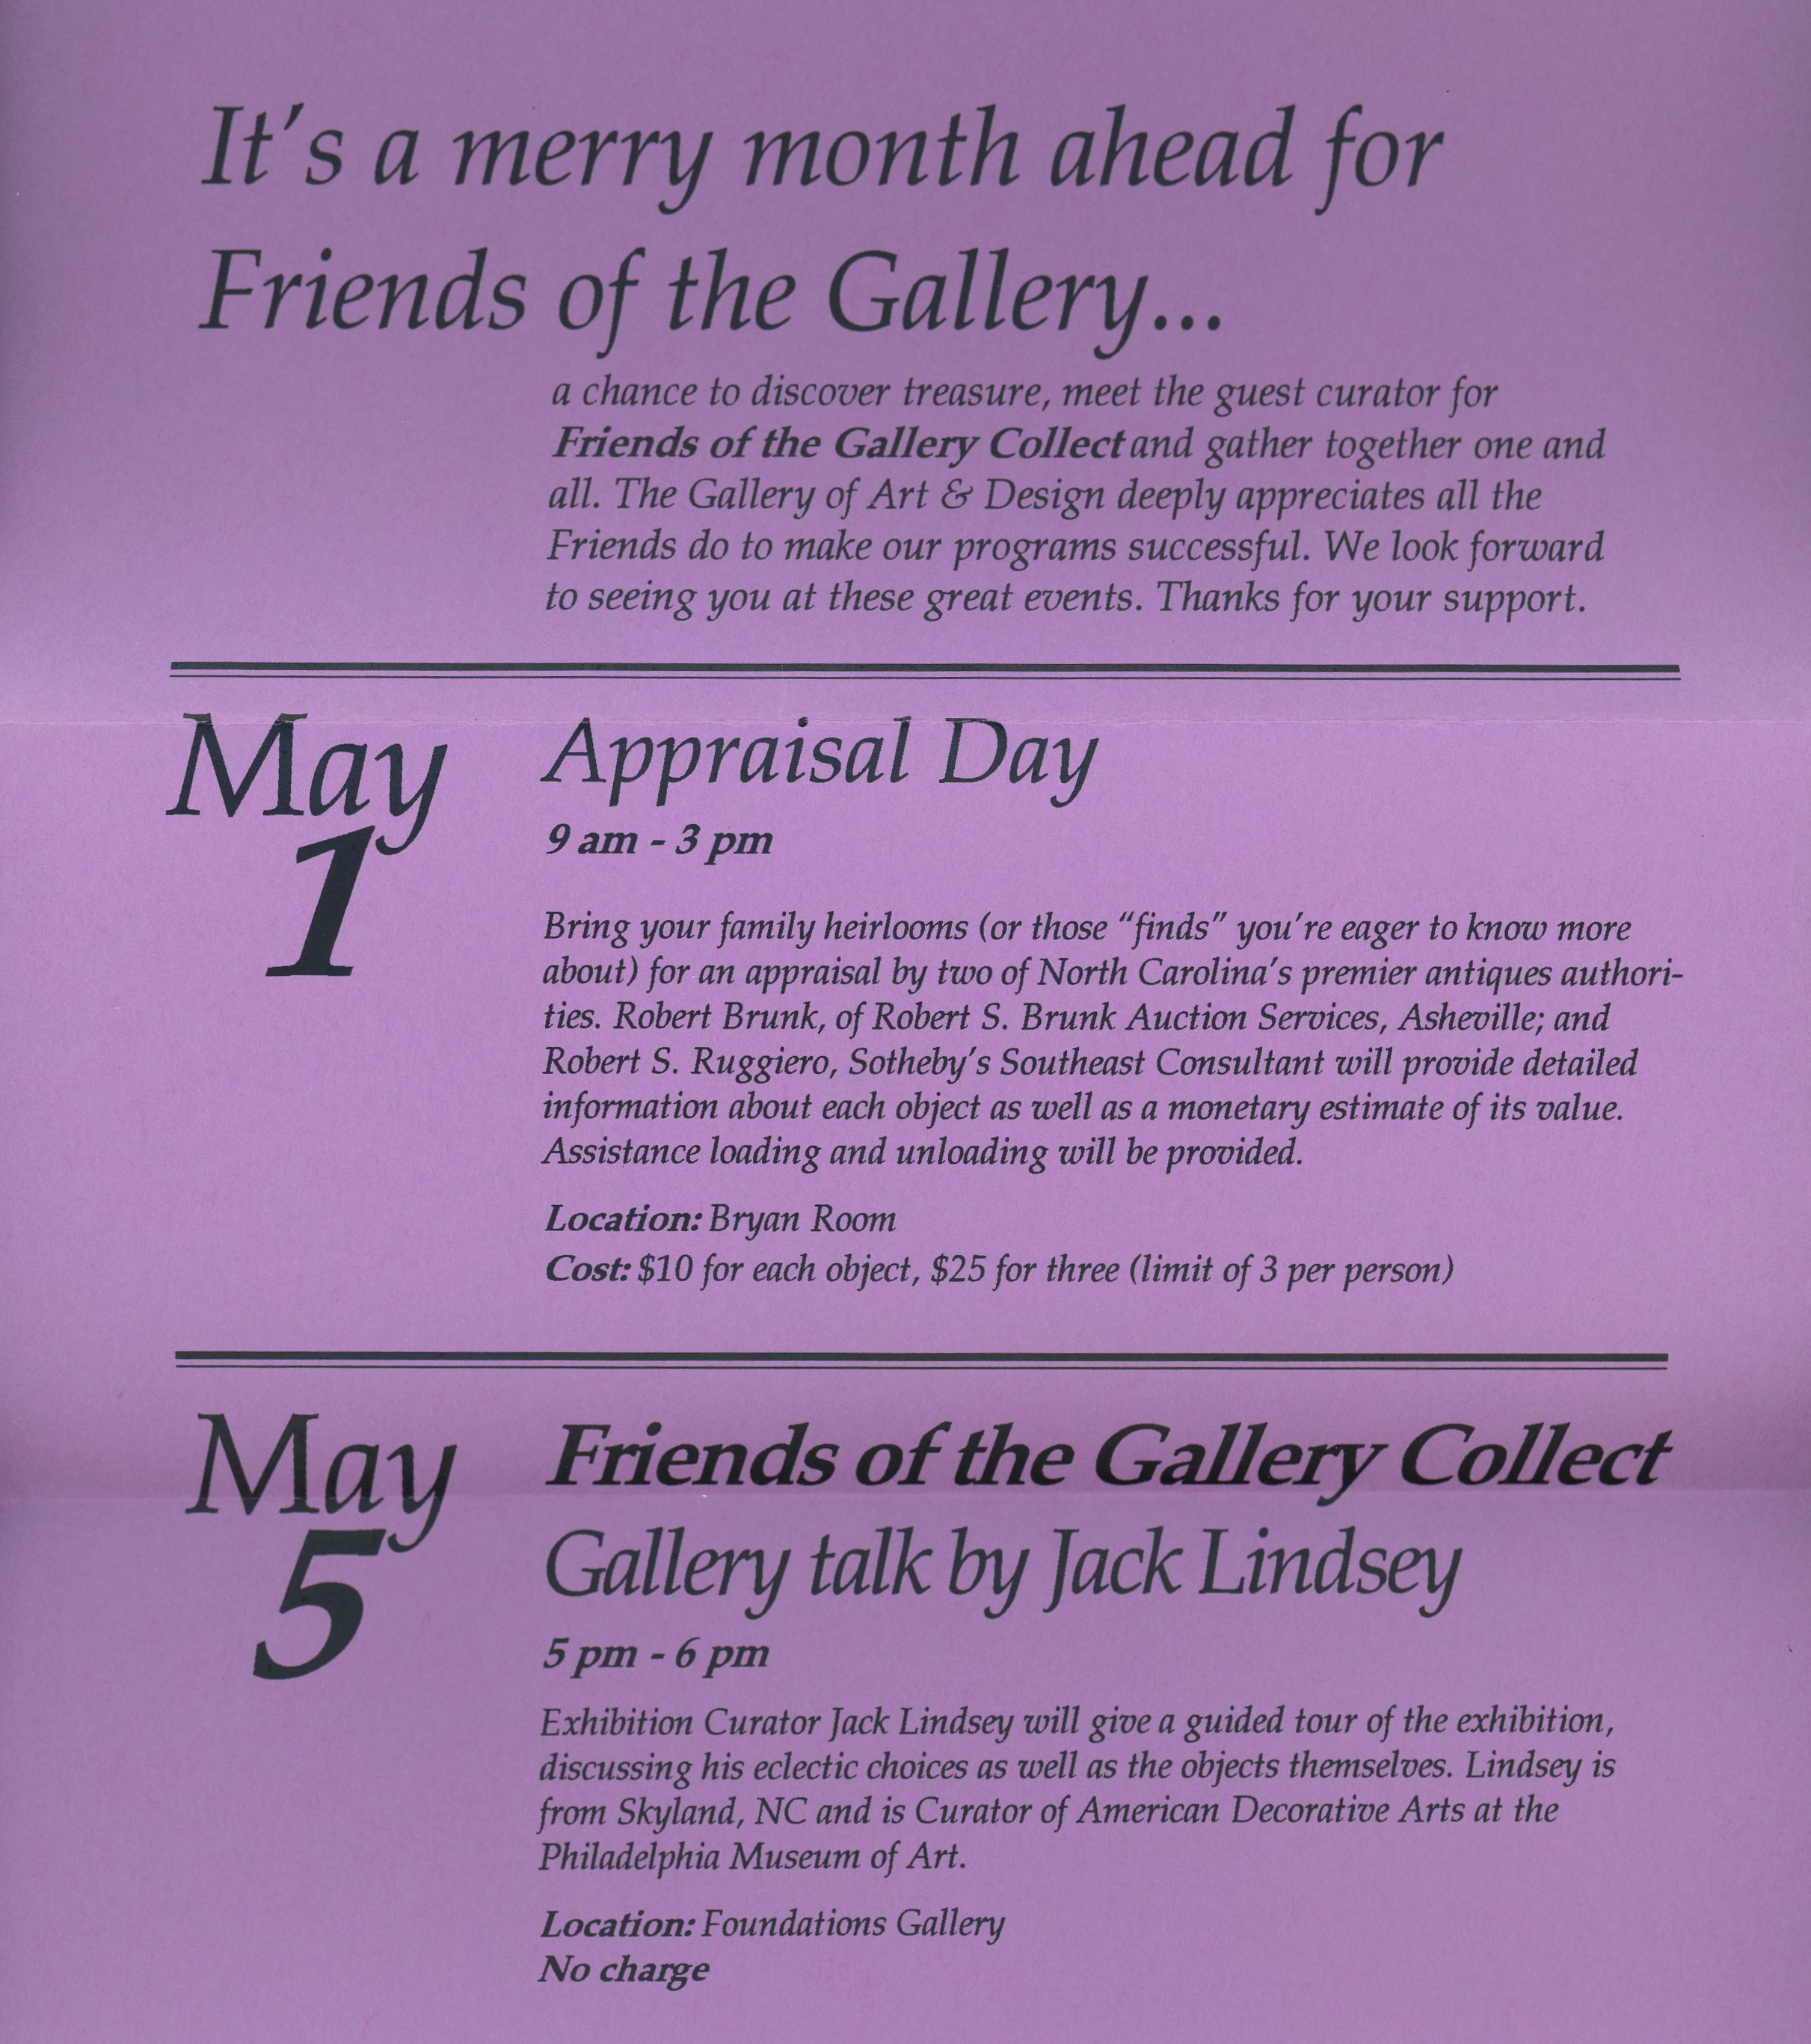 Friends of the Gallery event calendar